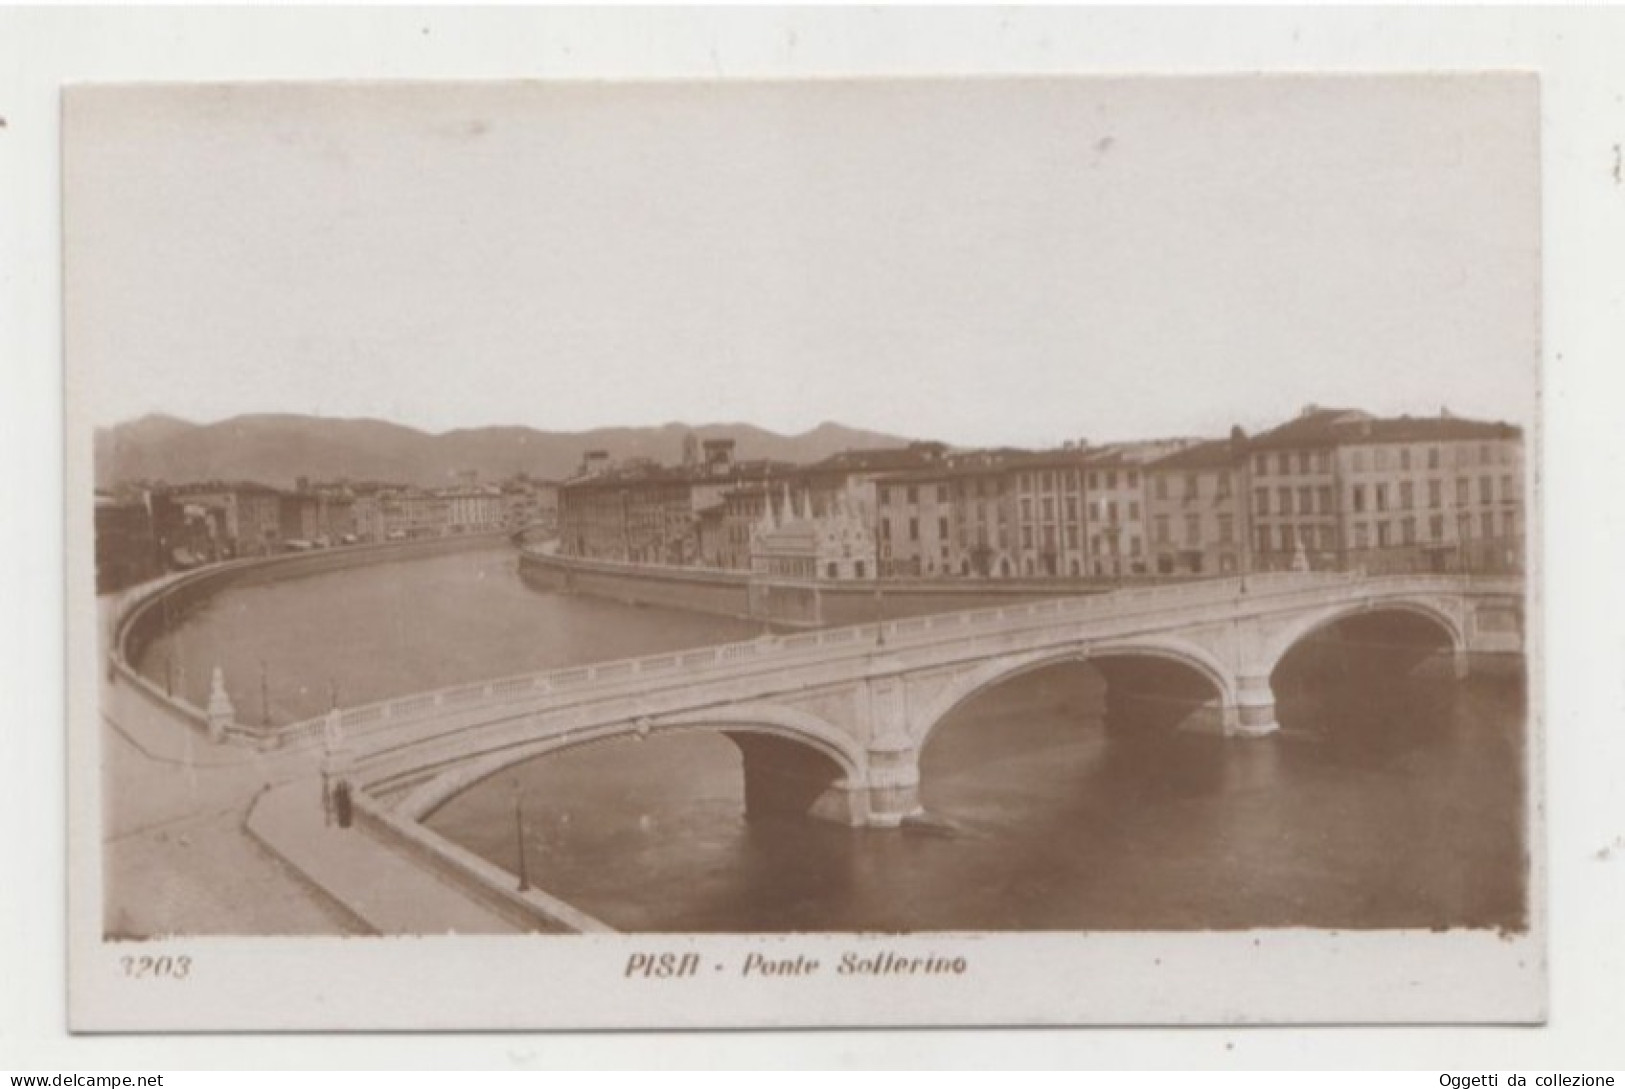 PISA, Ponte Solferino  - Non Viaggiata  (1393) - Pisa